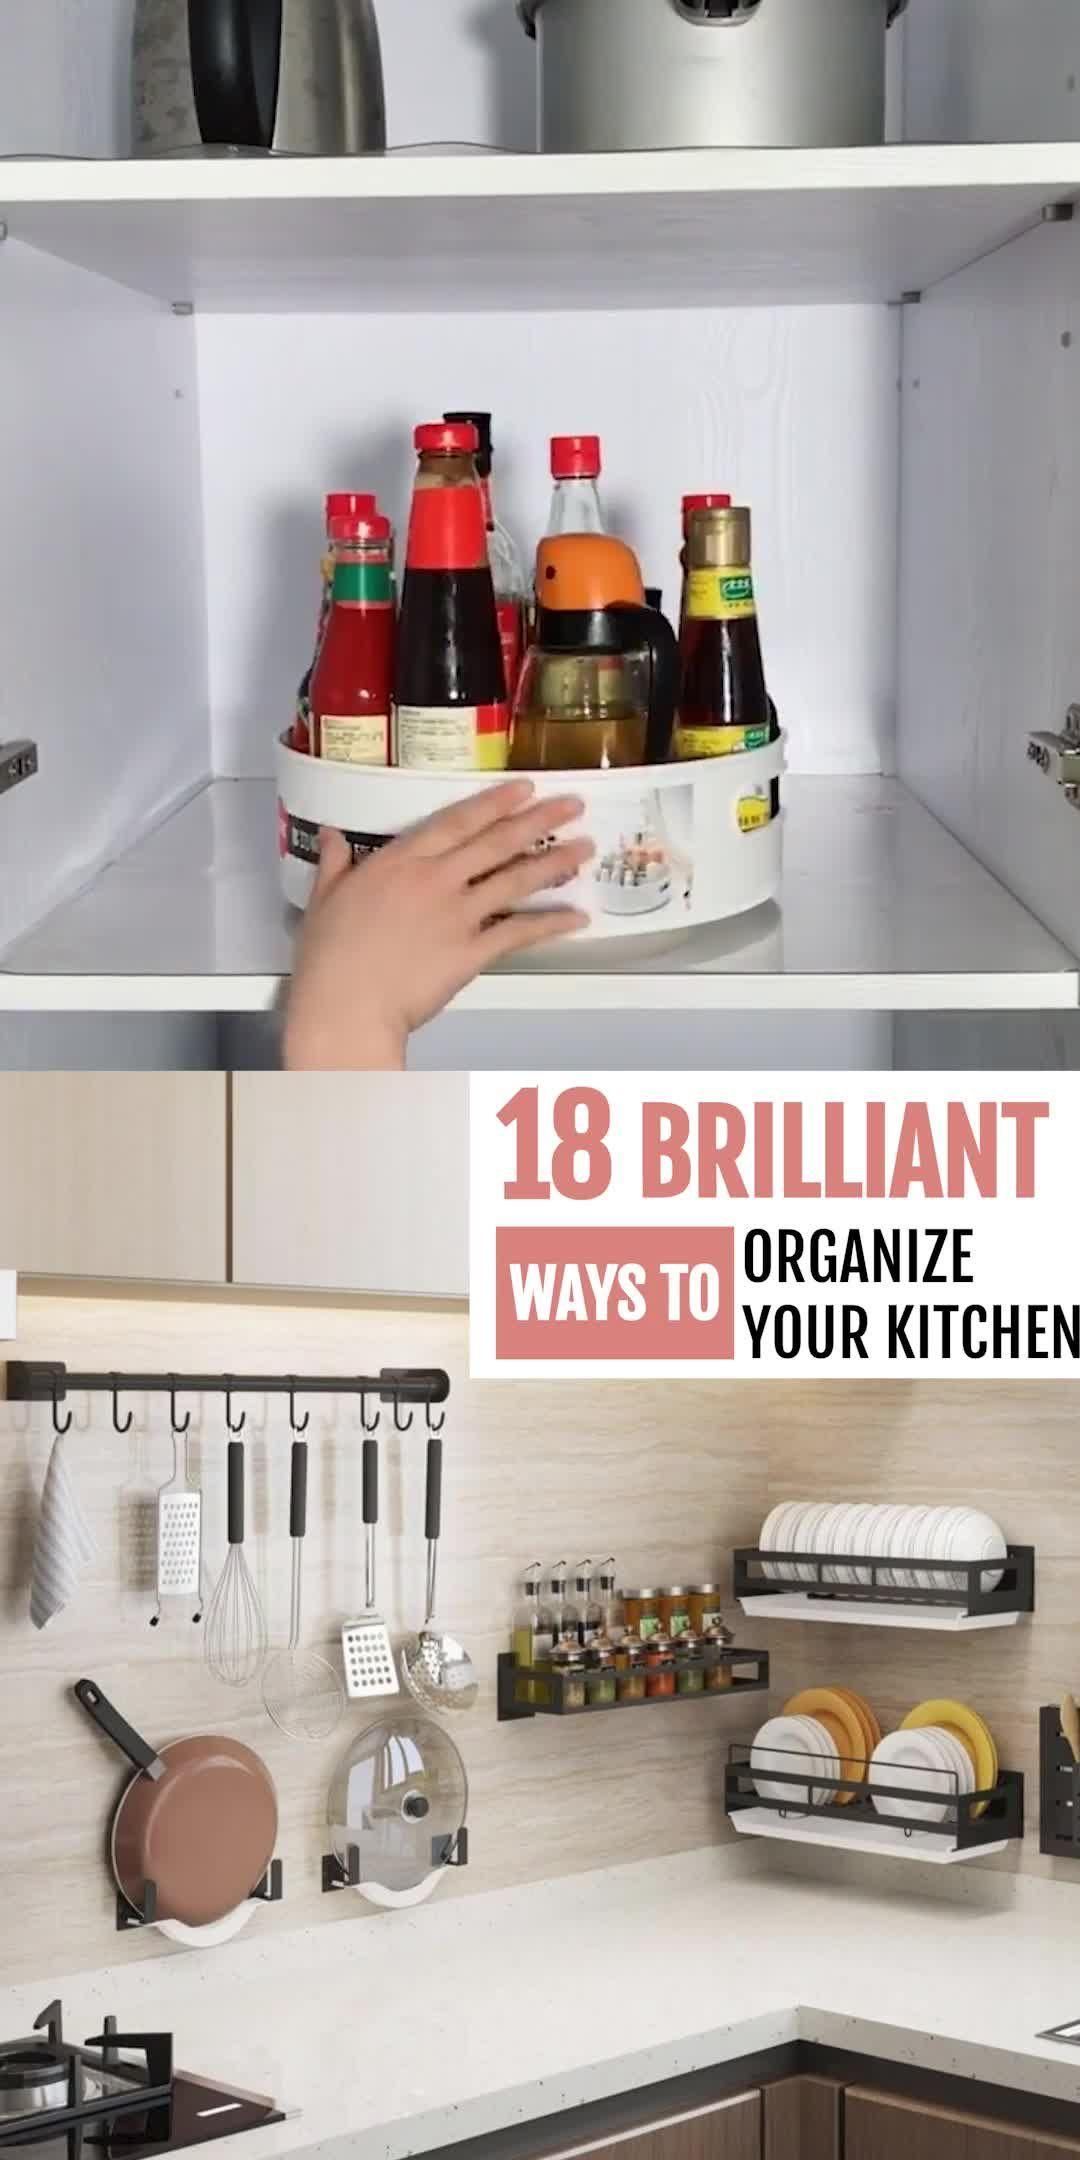 19 diy Kitchen tips ideas